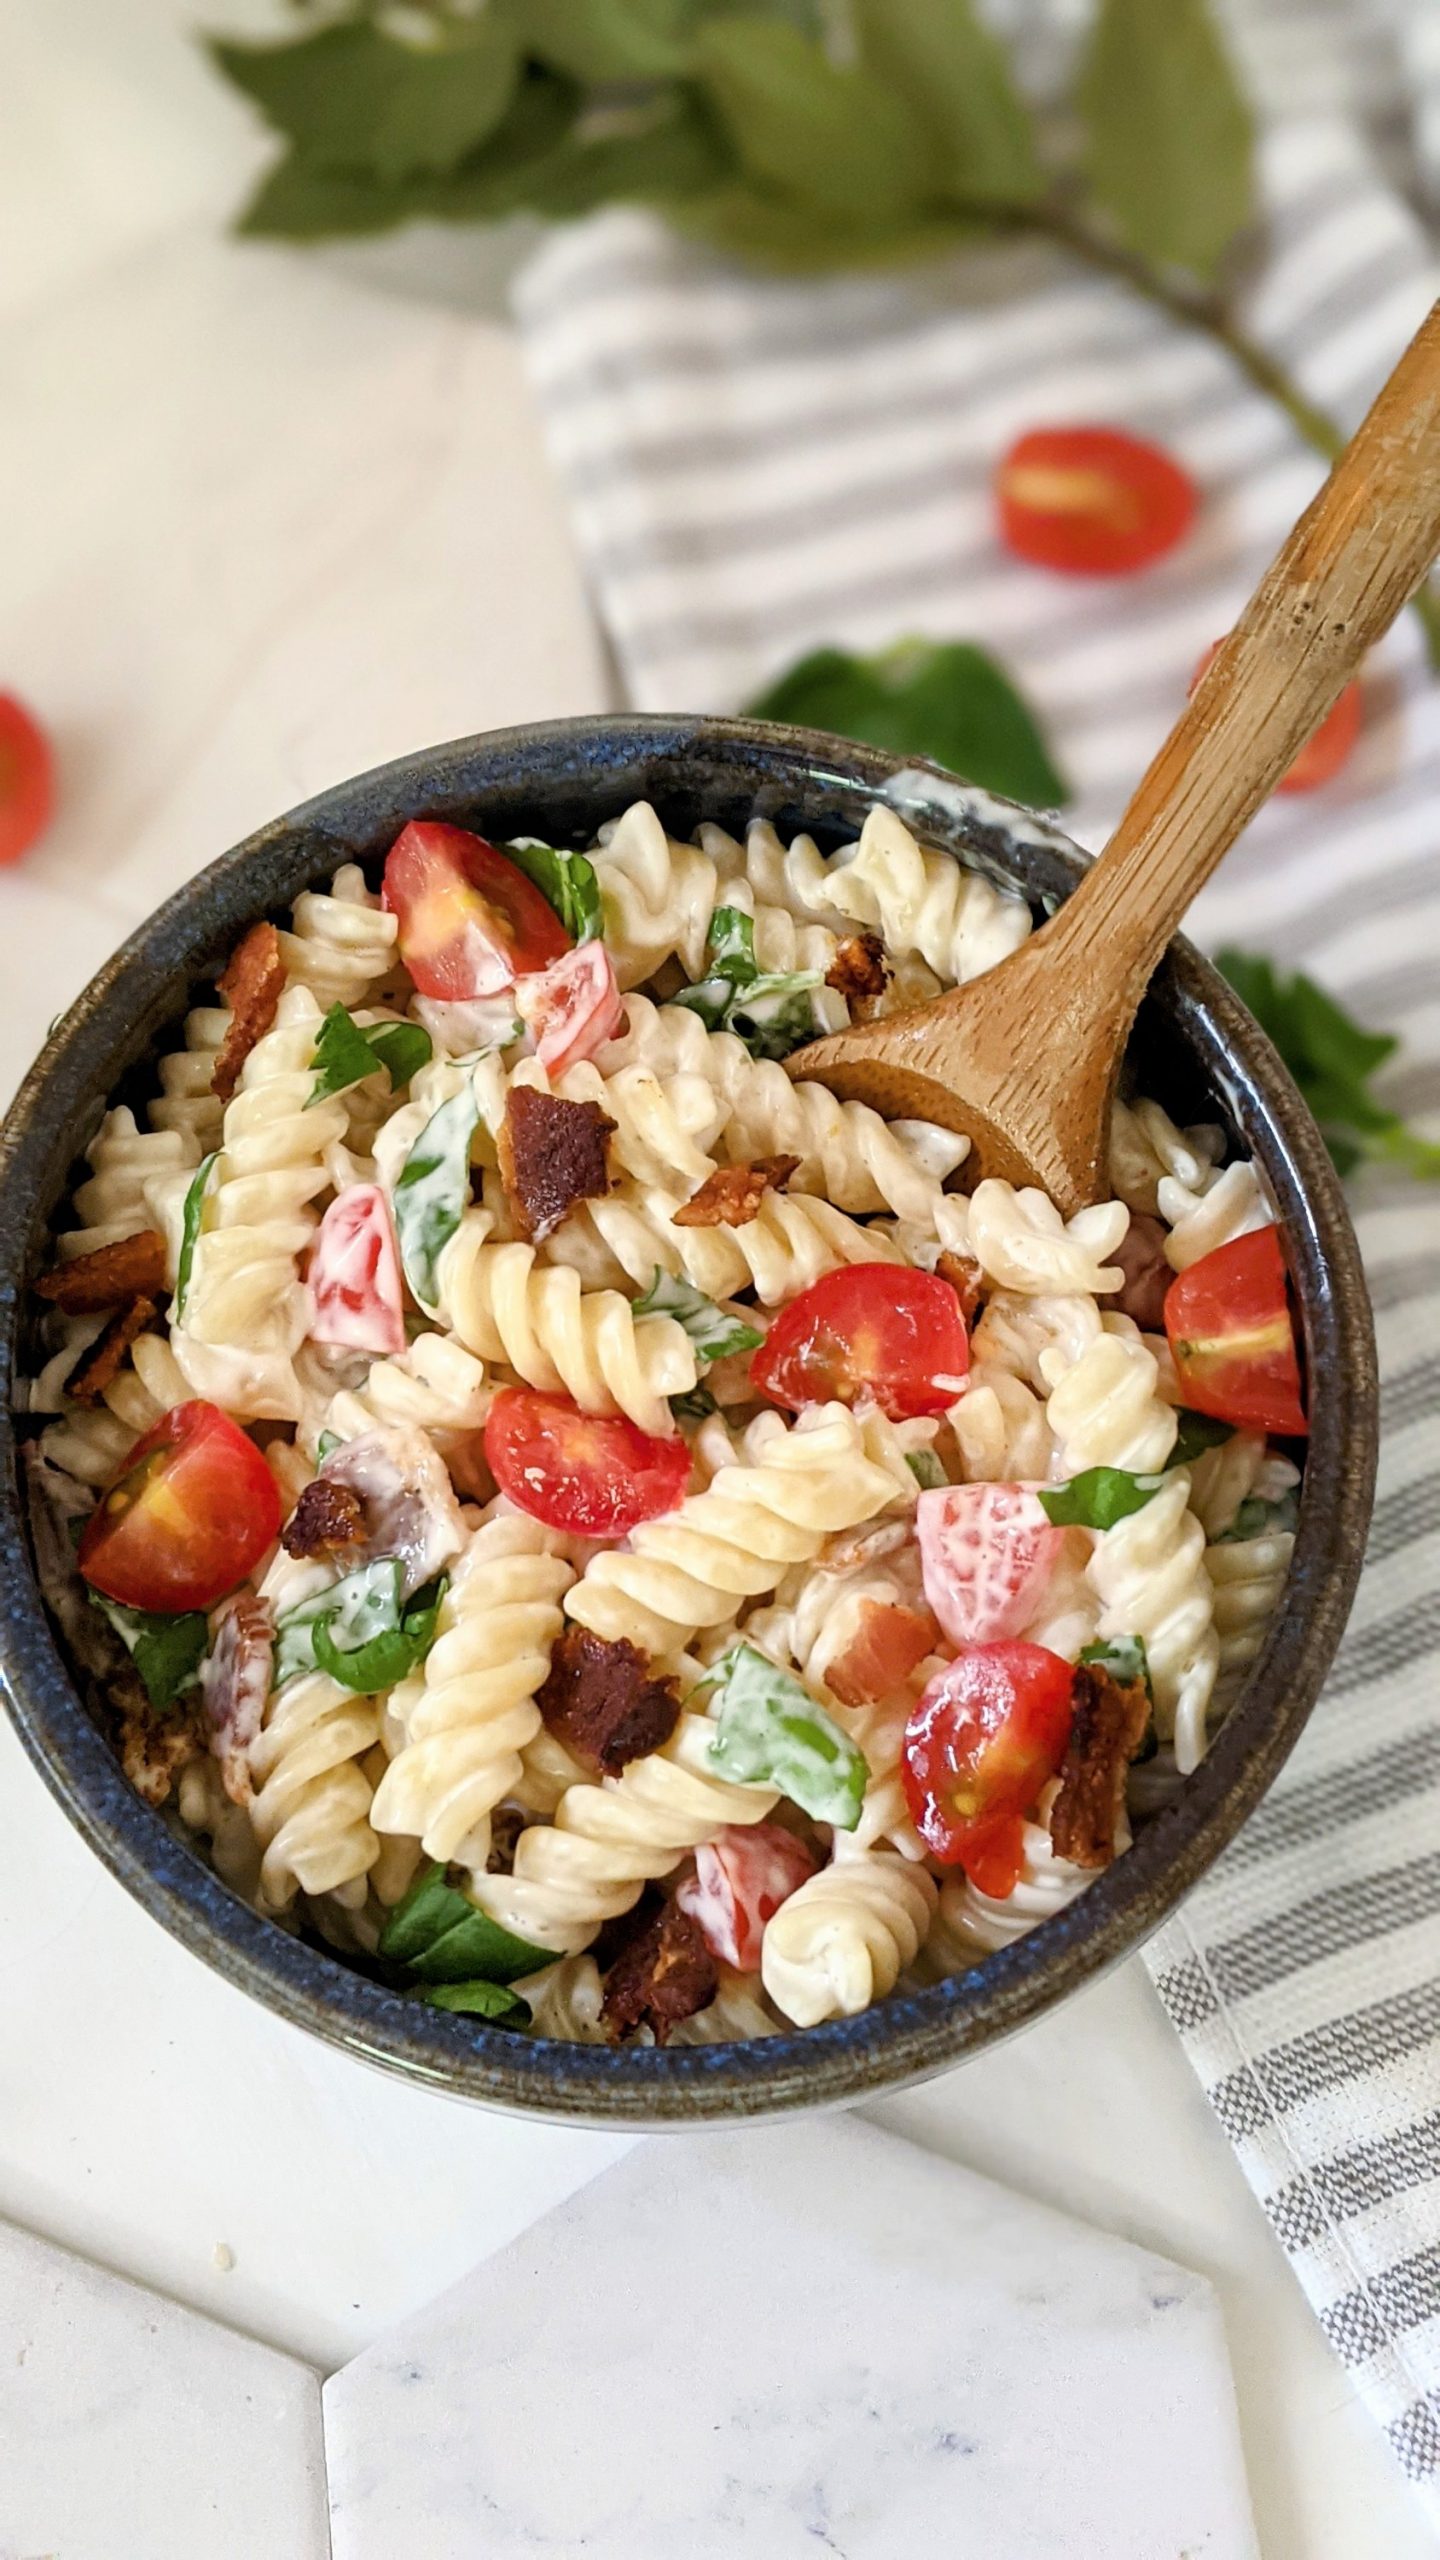 blt-pasta-salad-with-ranch-dressing-recipe-modern-bites